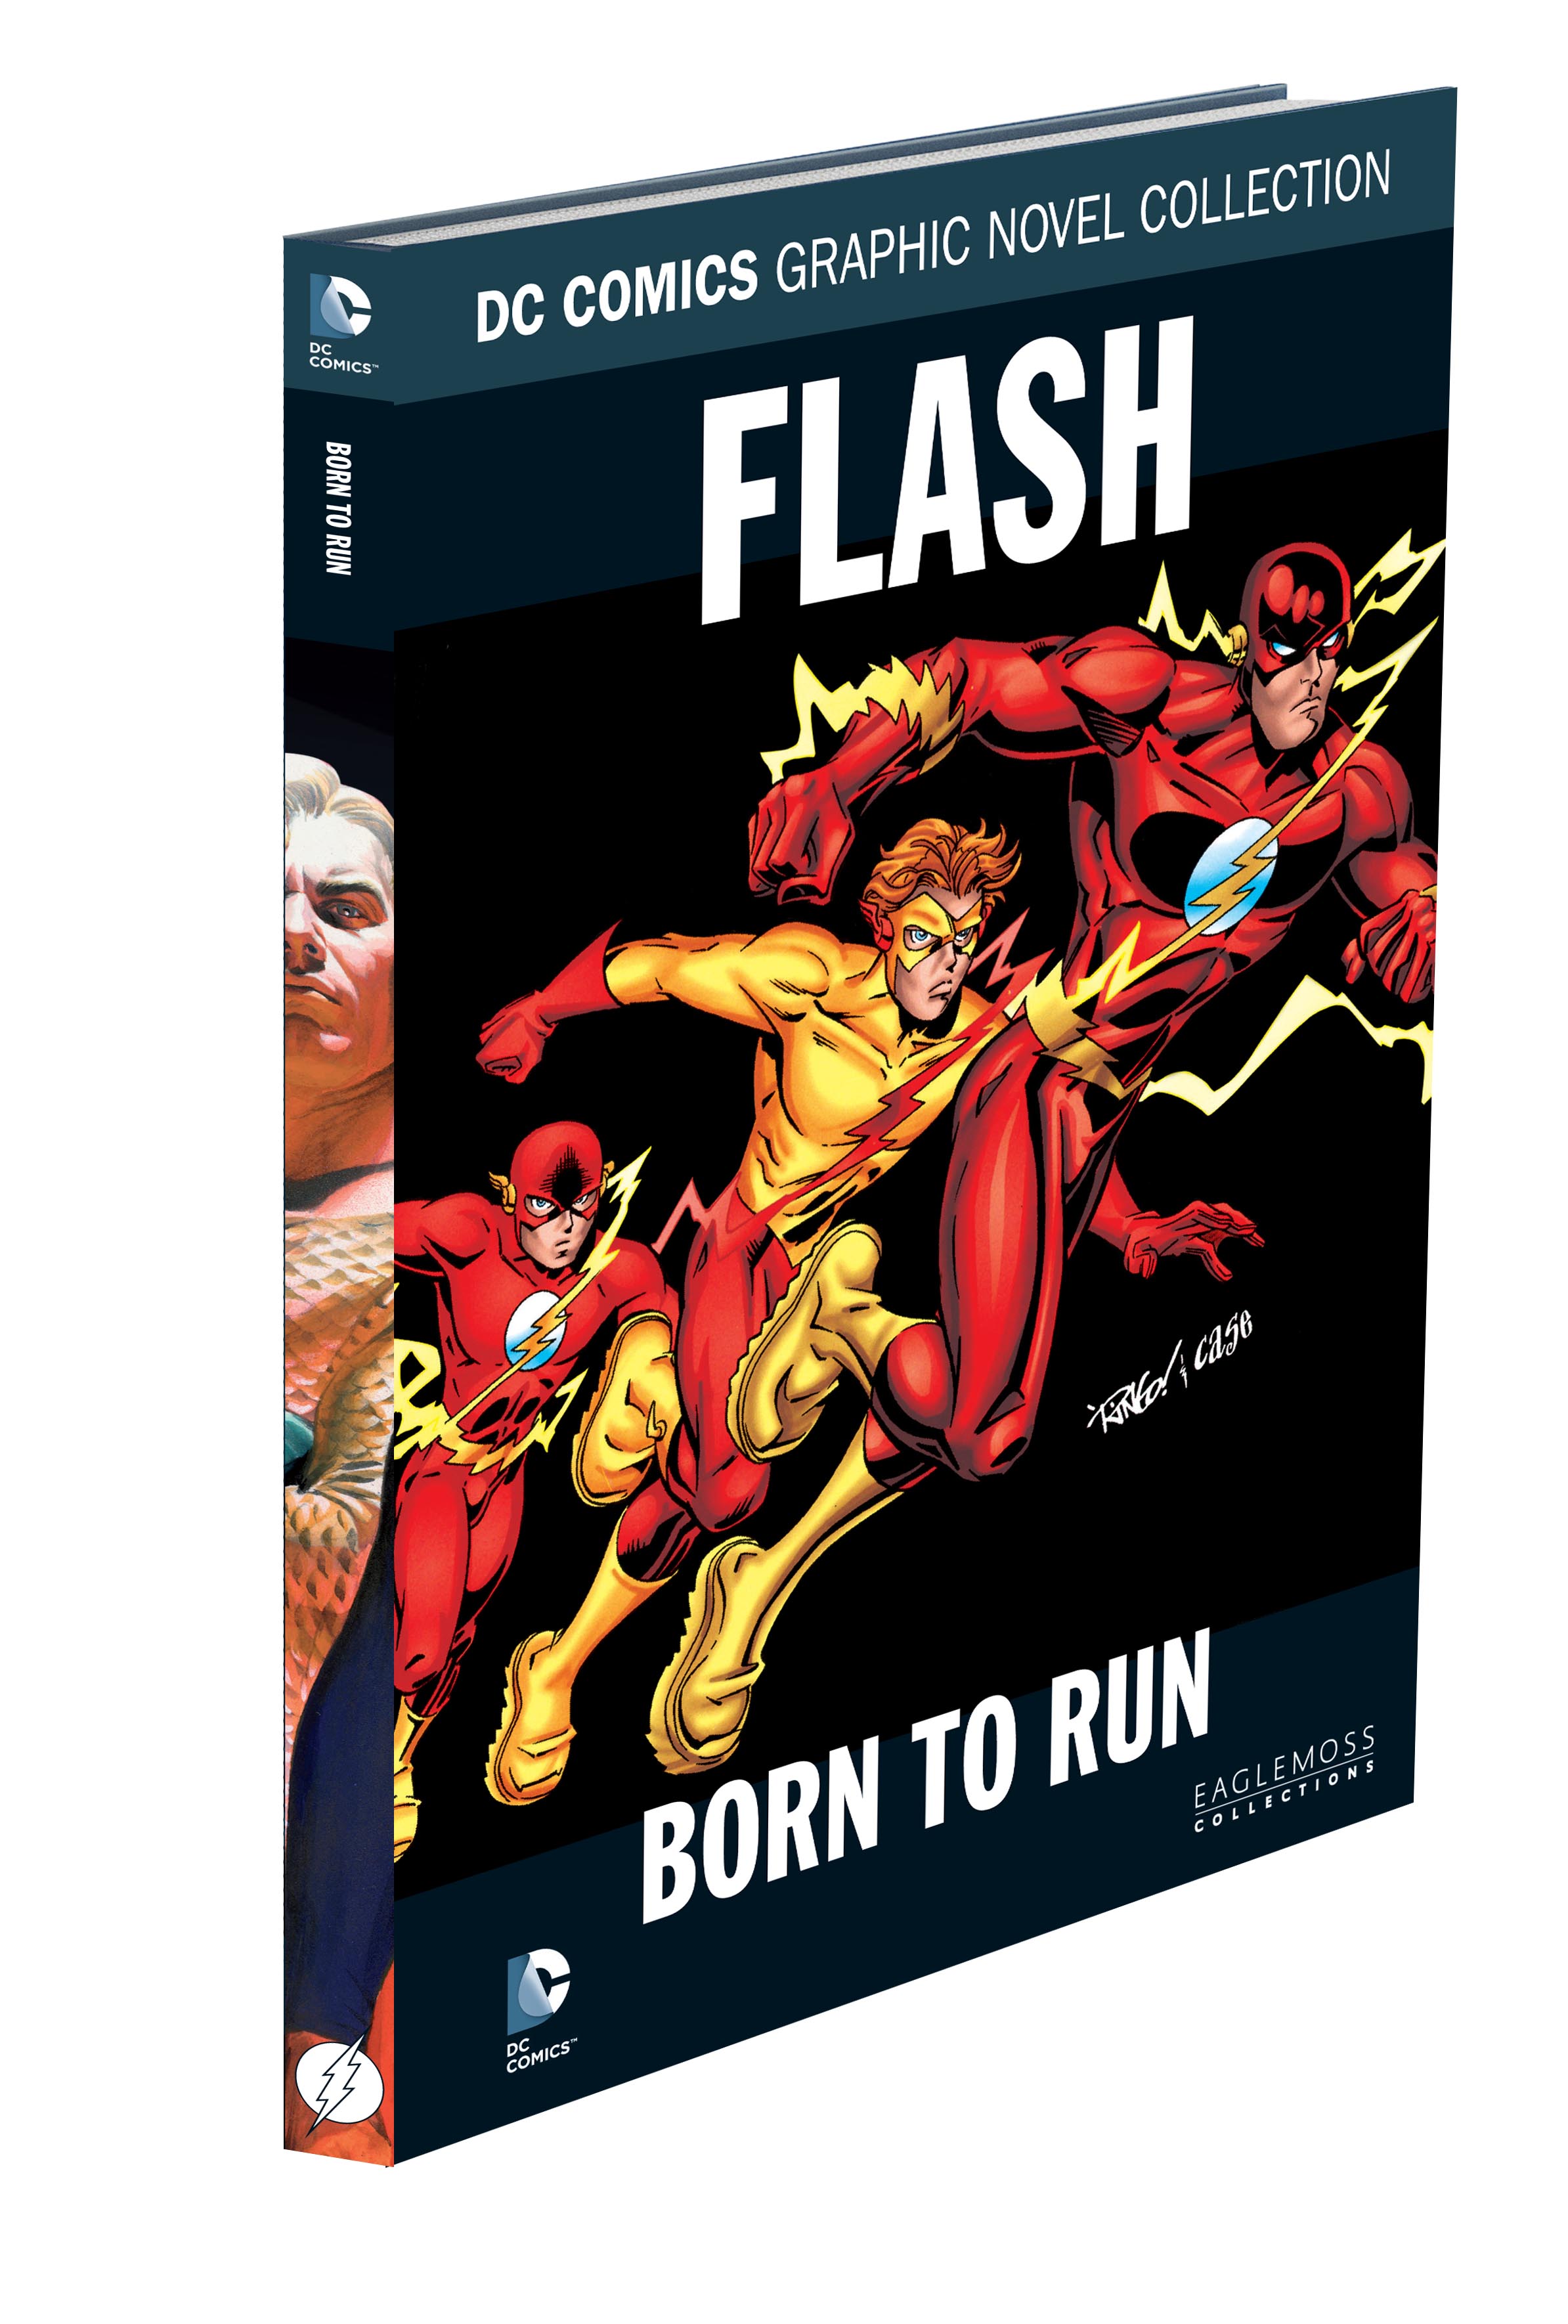 DC Comics Graphic Novel Collection Flash - Born to run